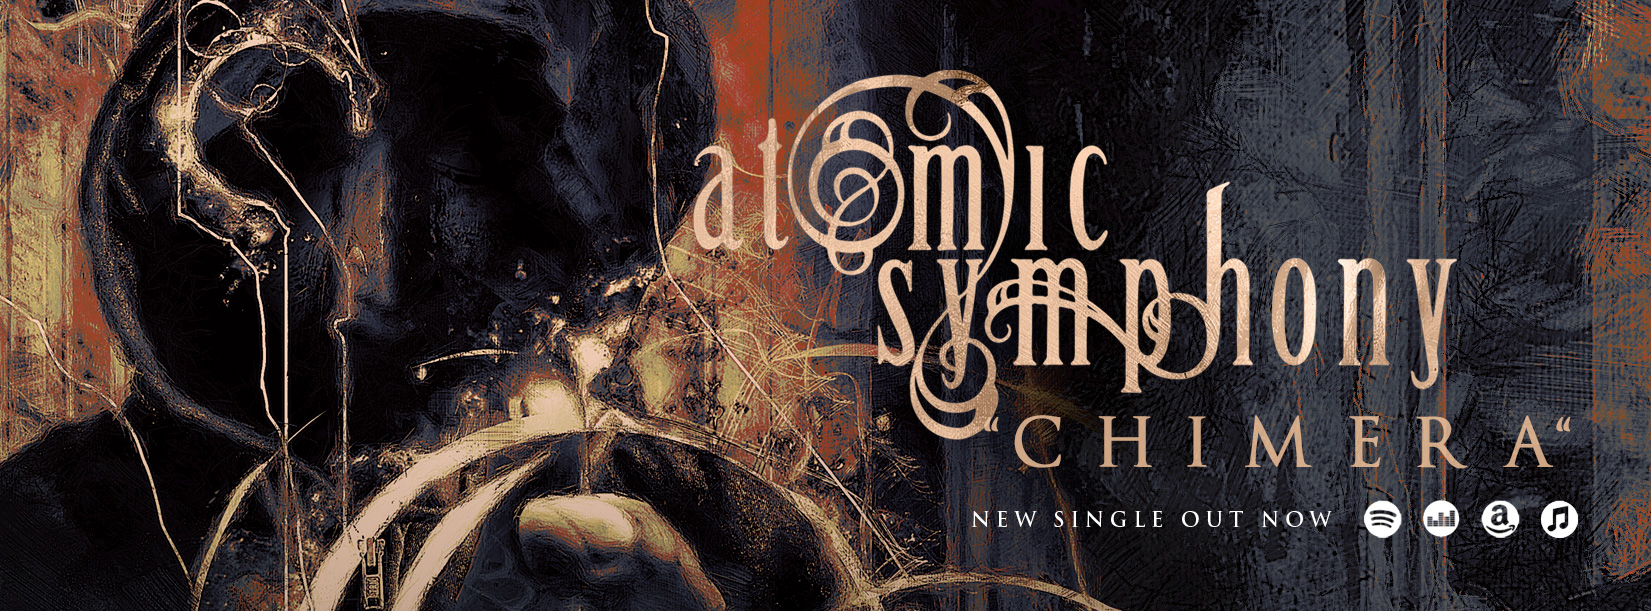 Atomic Symphony - Chimera. New Single out now.